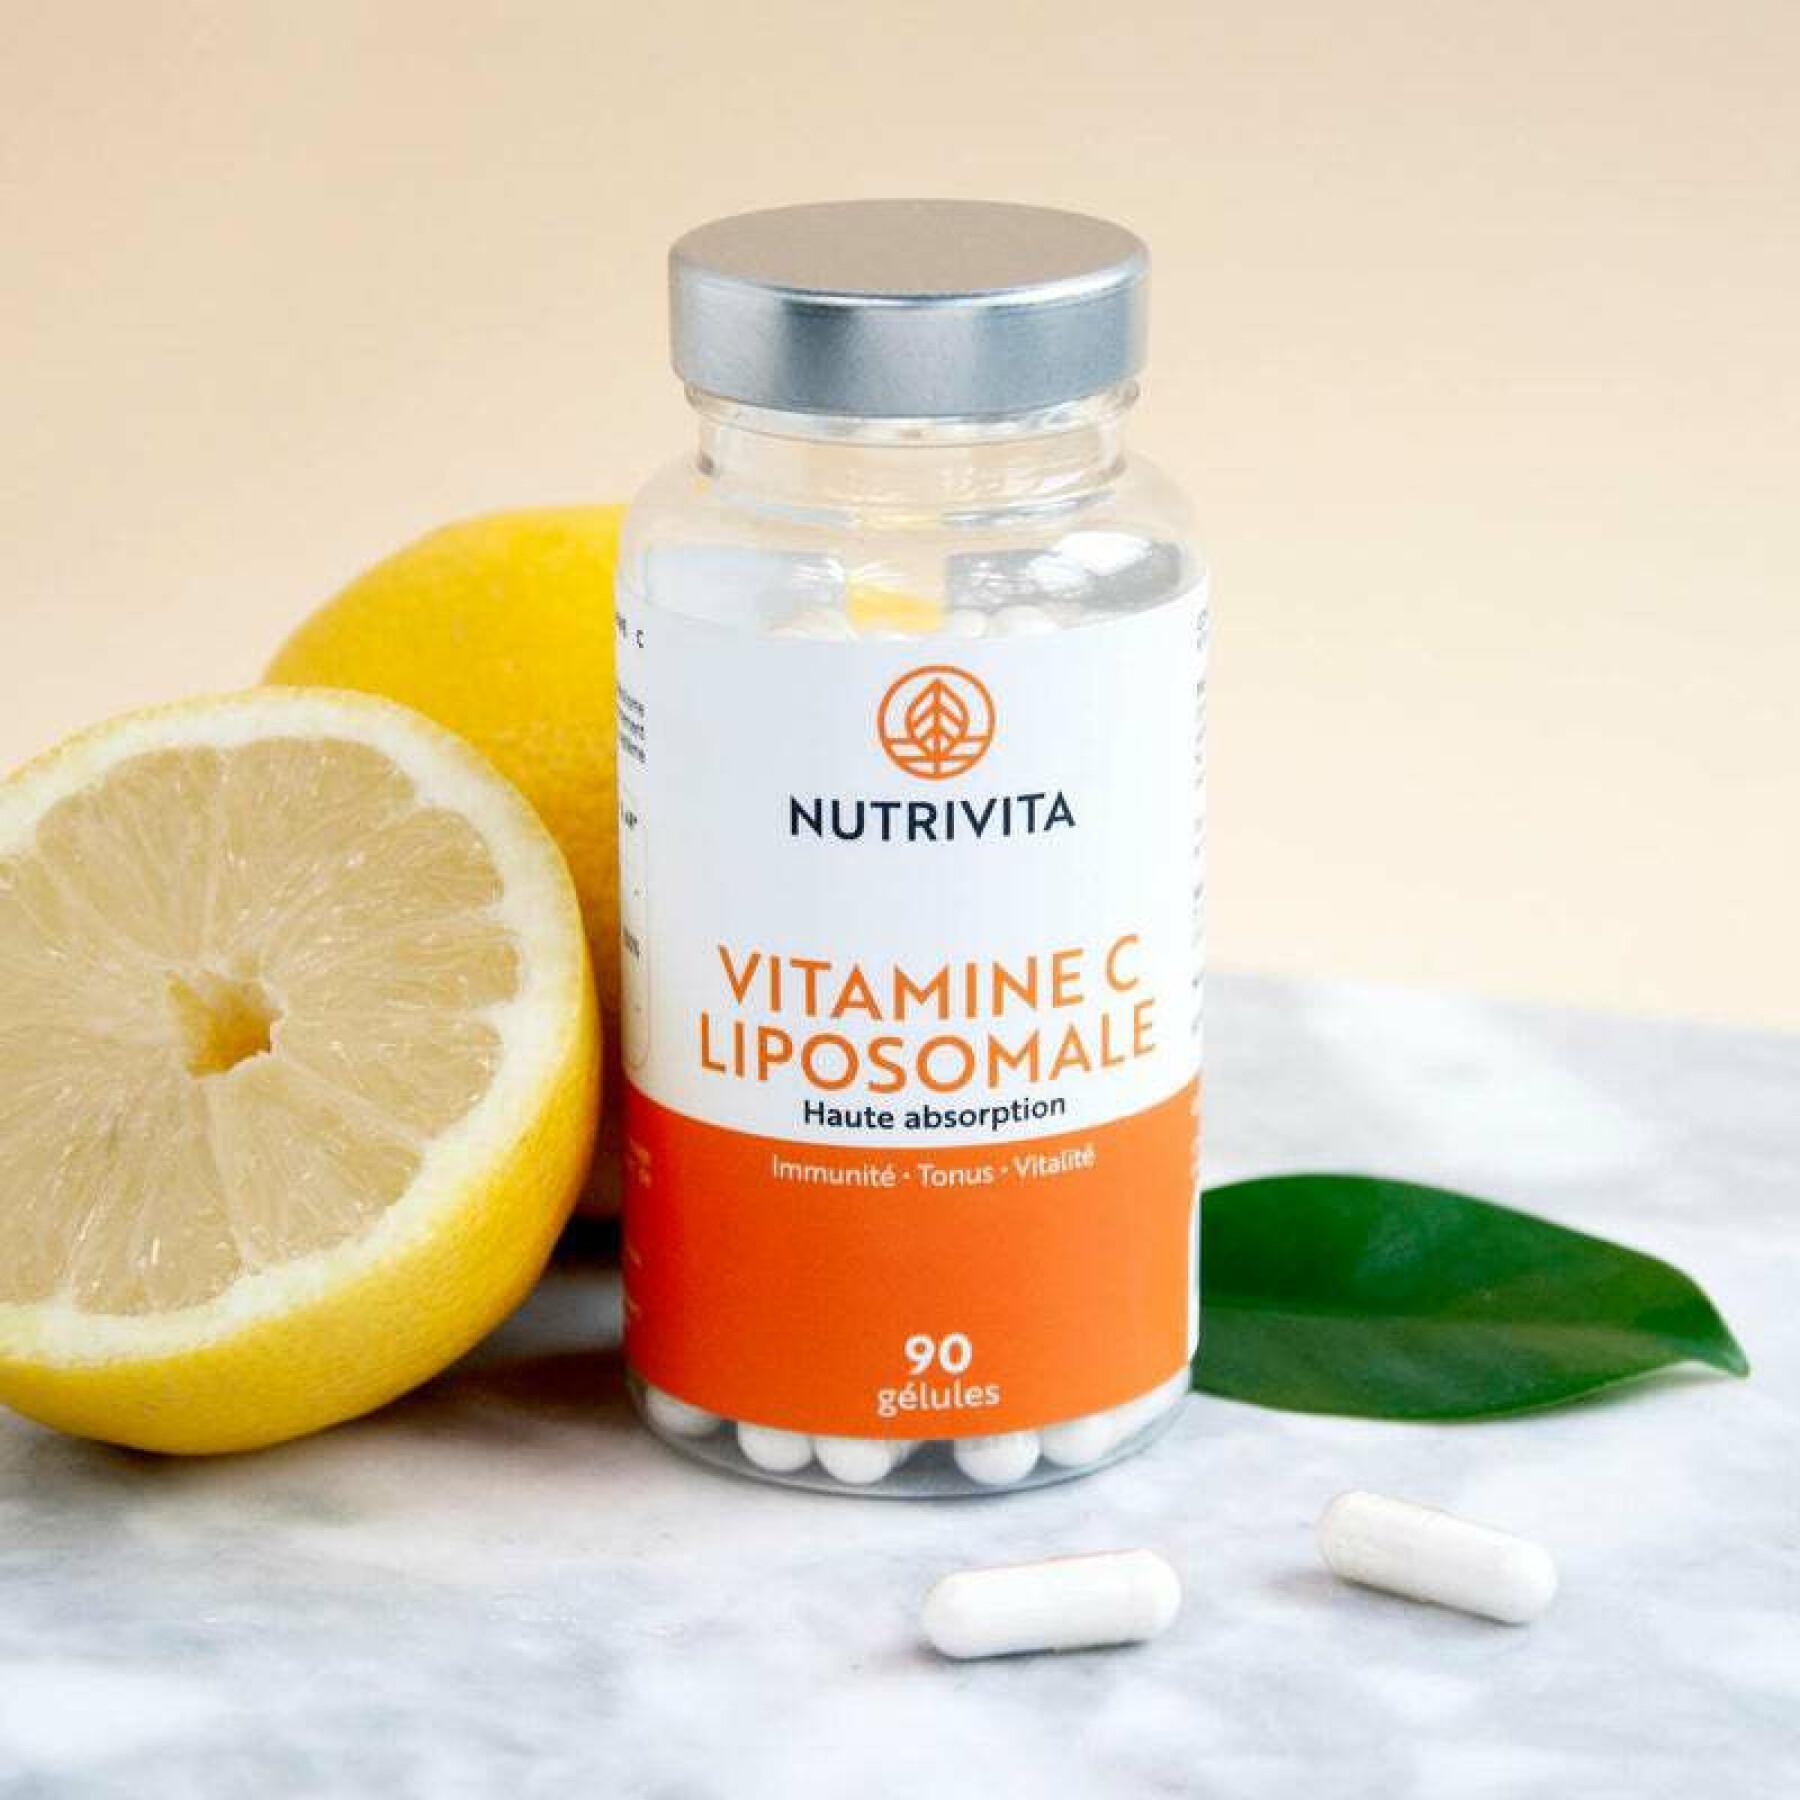 Food supplement vitamin c liposomal 90 capsules Nutrivita